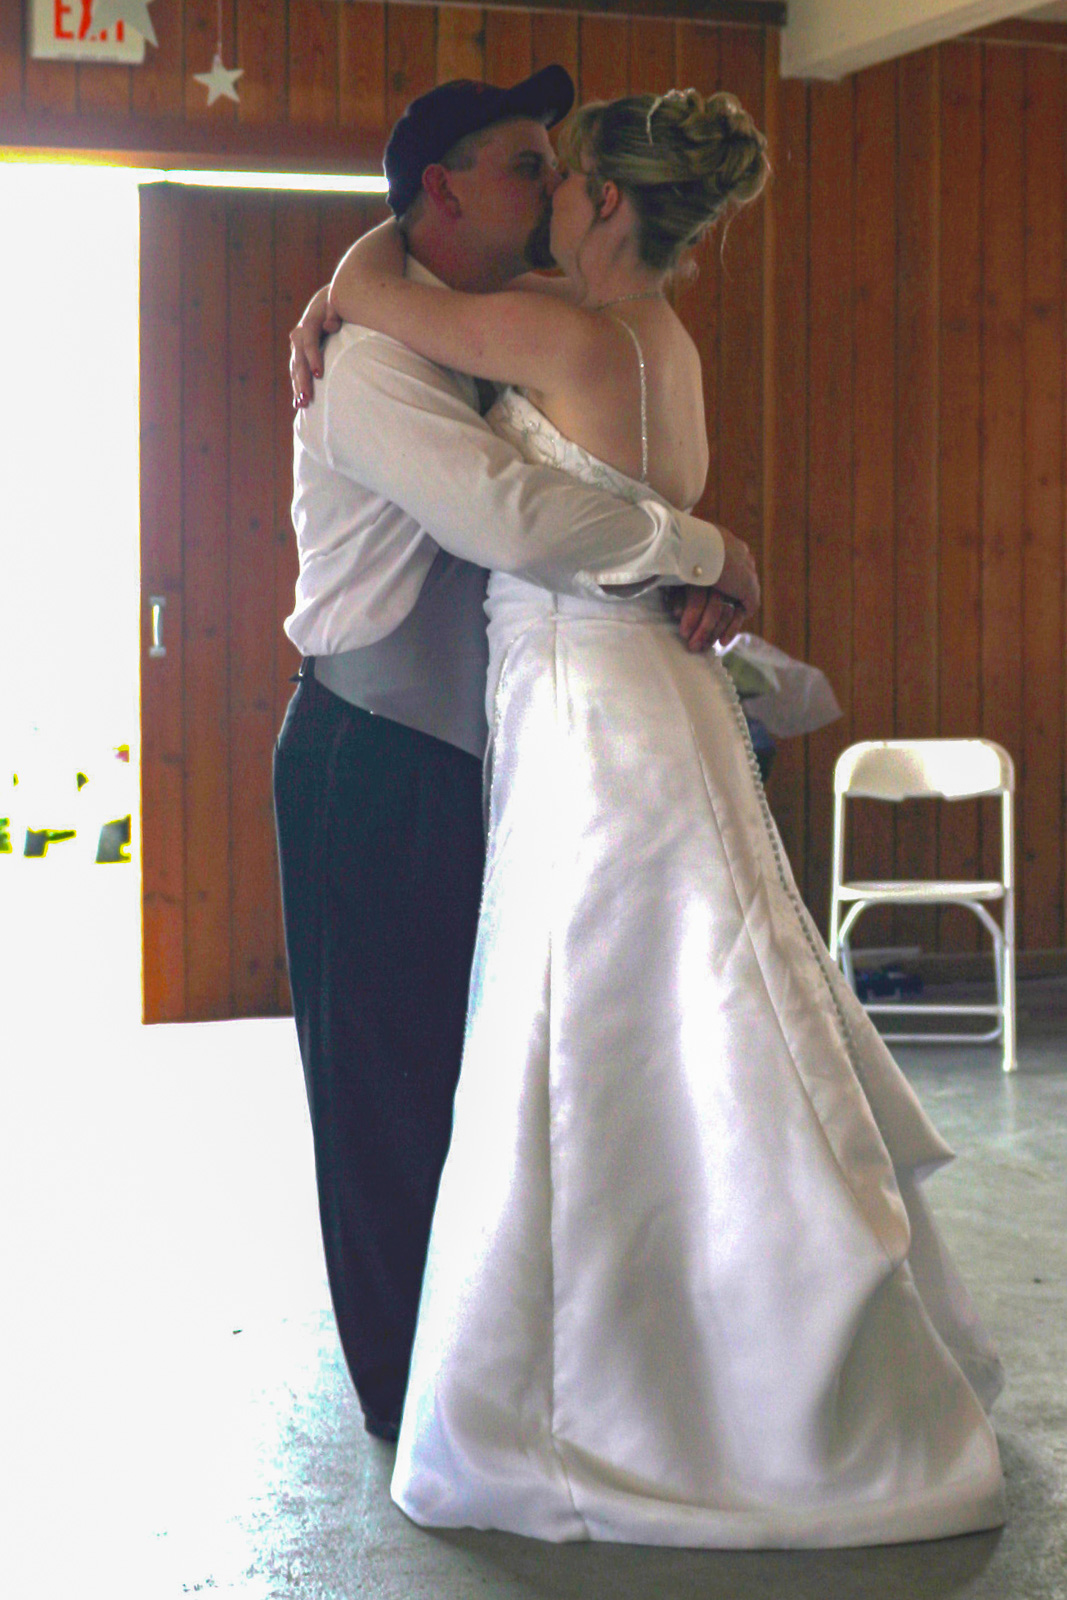 Todd & Celeste's Wedding Day - Sunday